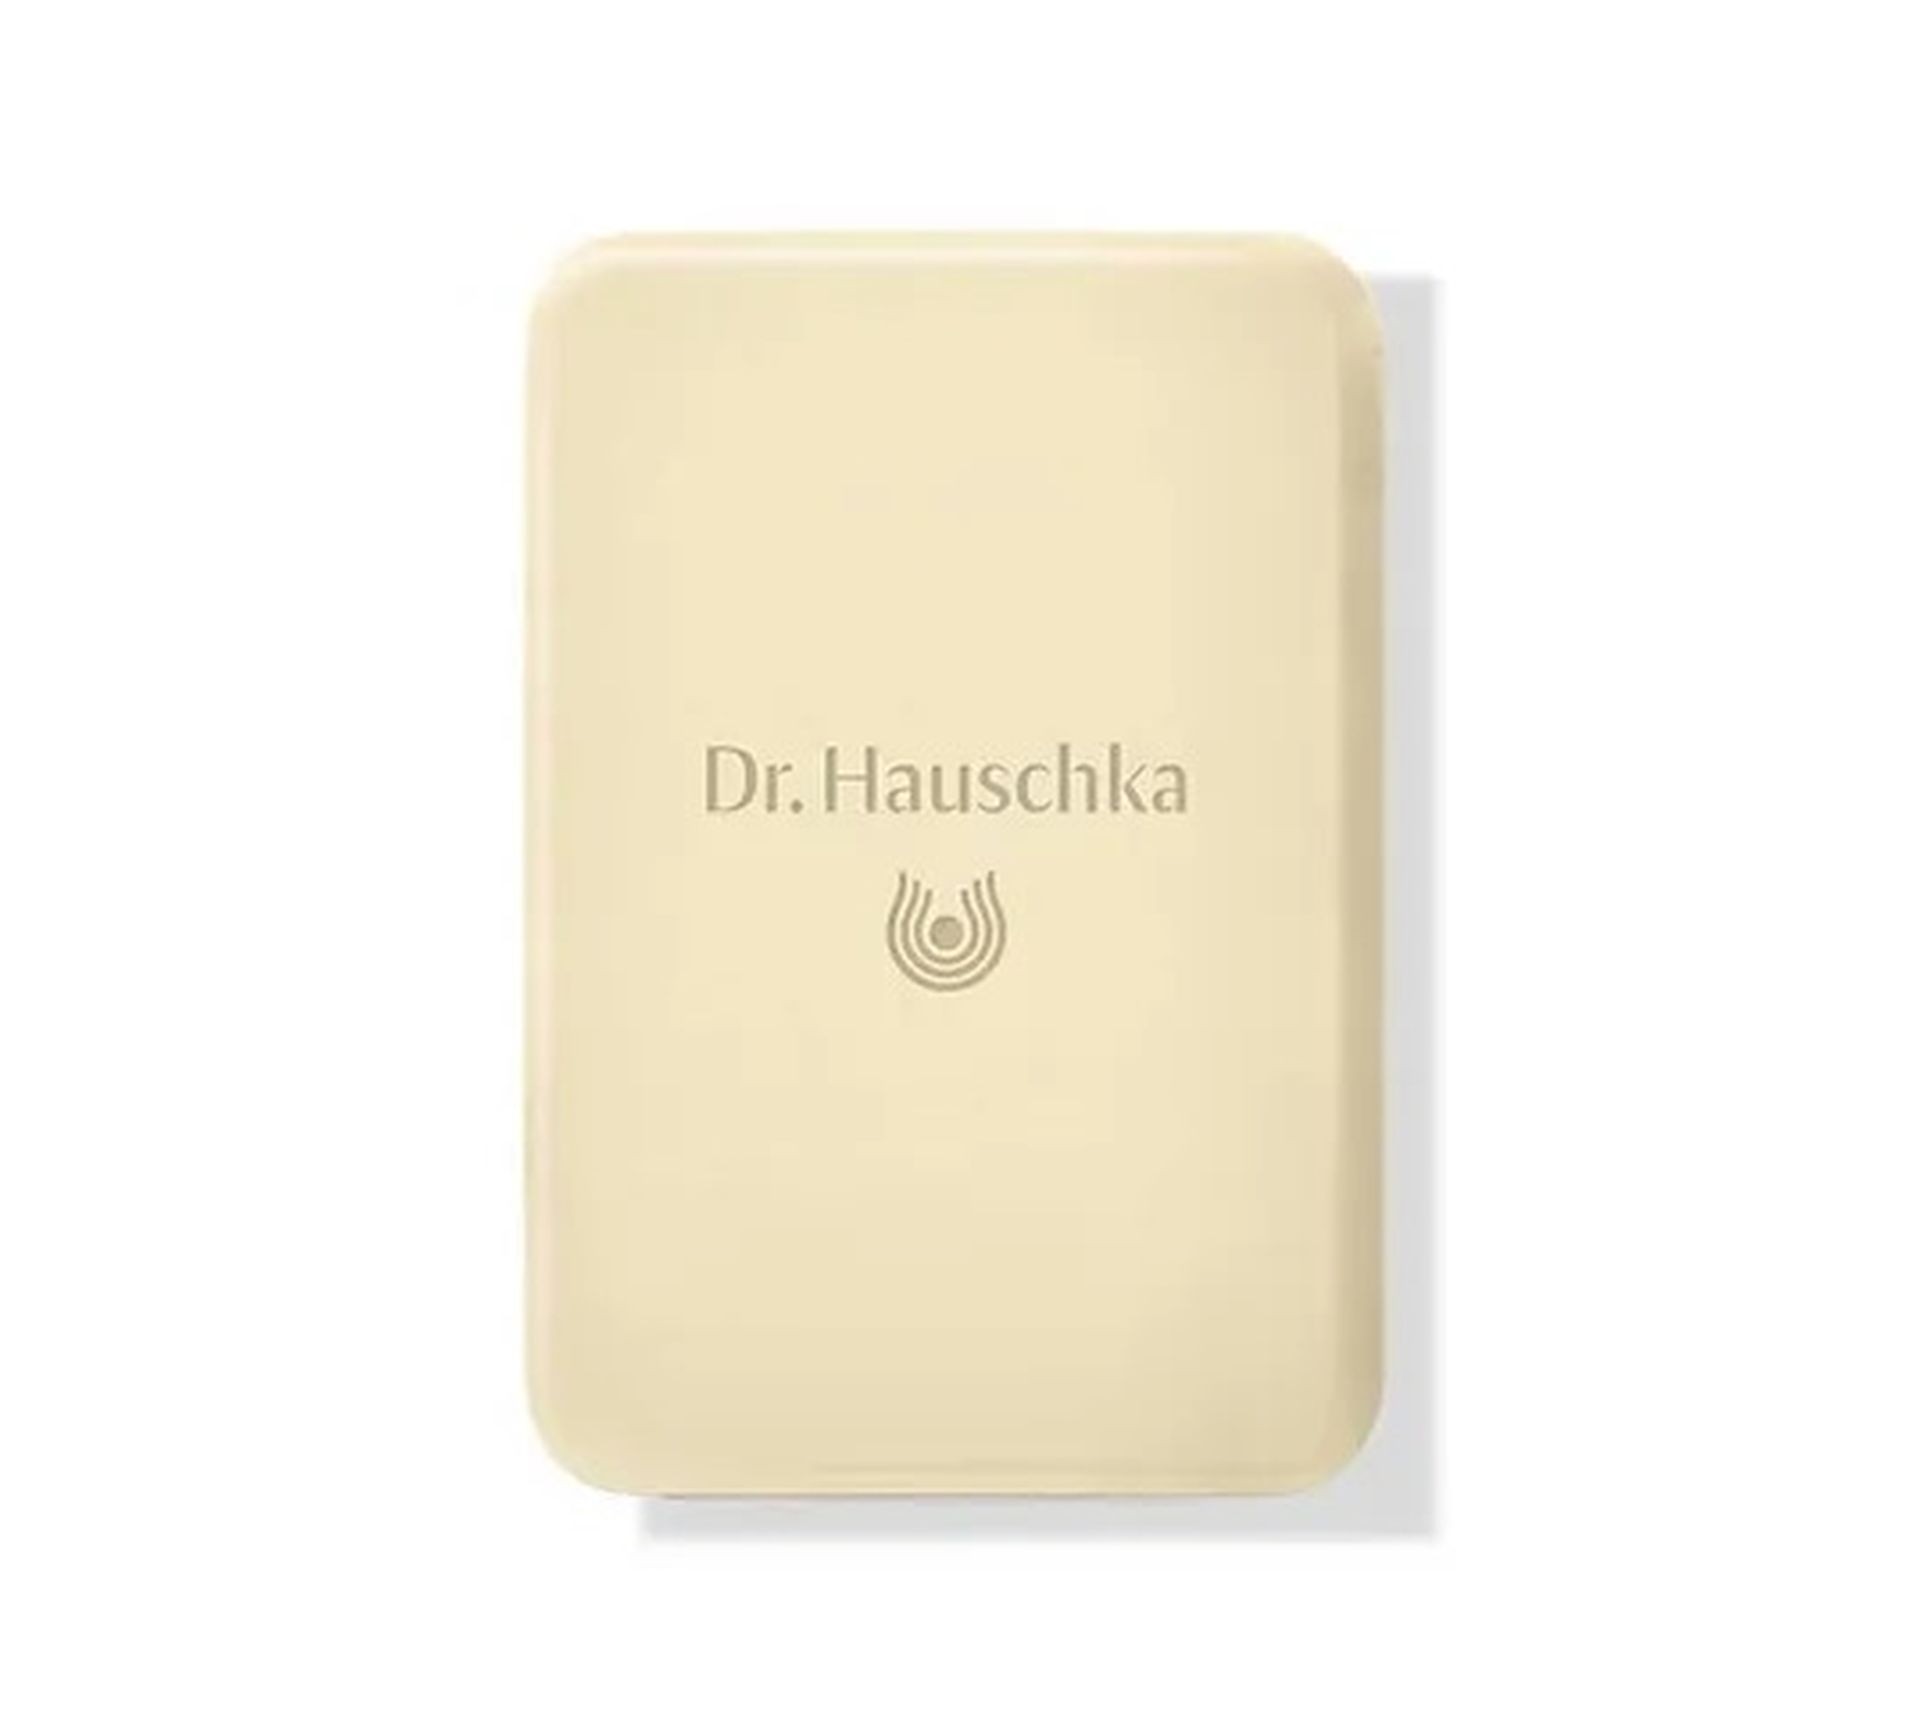 Dr. Hauschka Winter Soap mydło w kostce Cytryna (60 g)